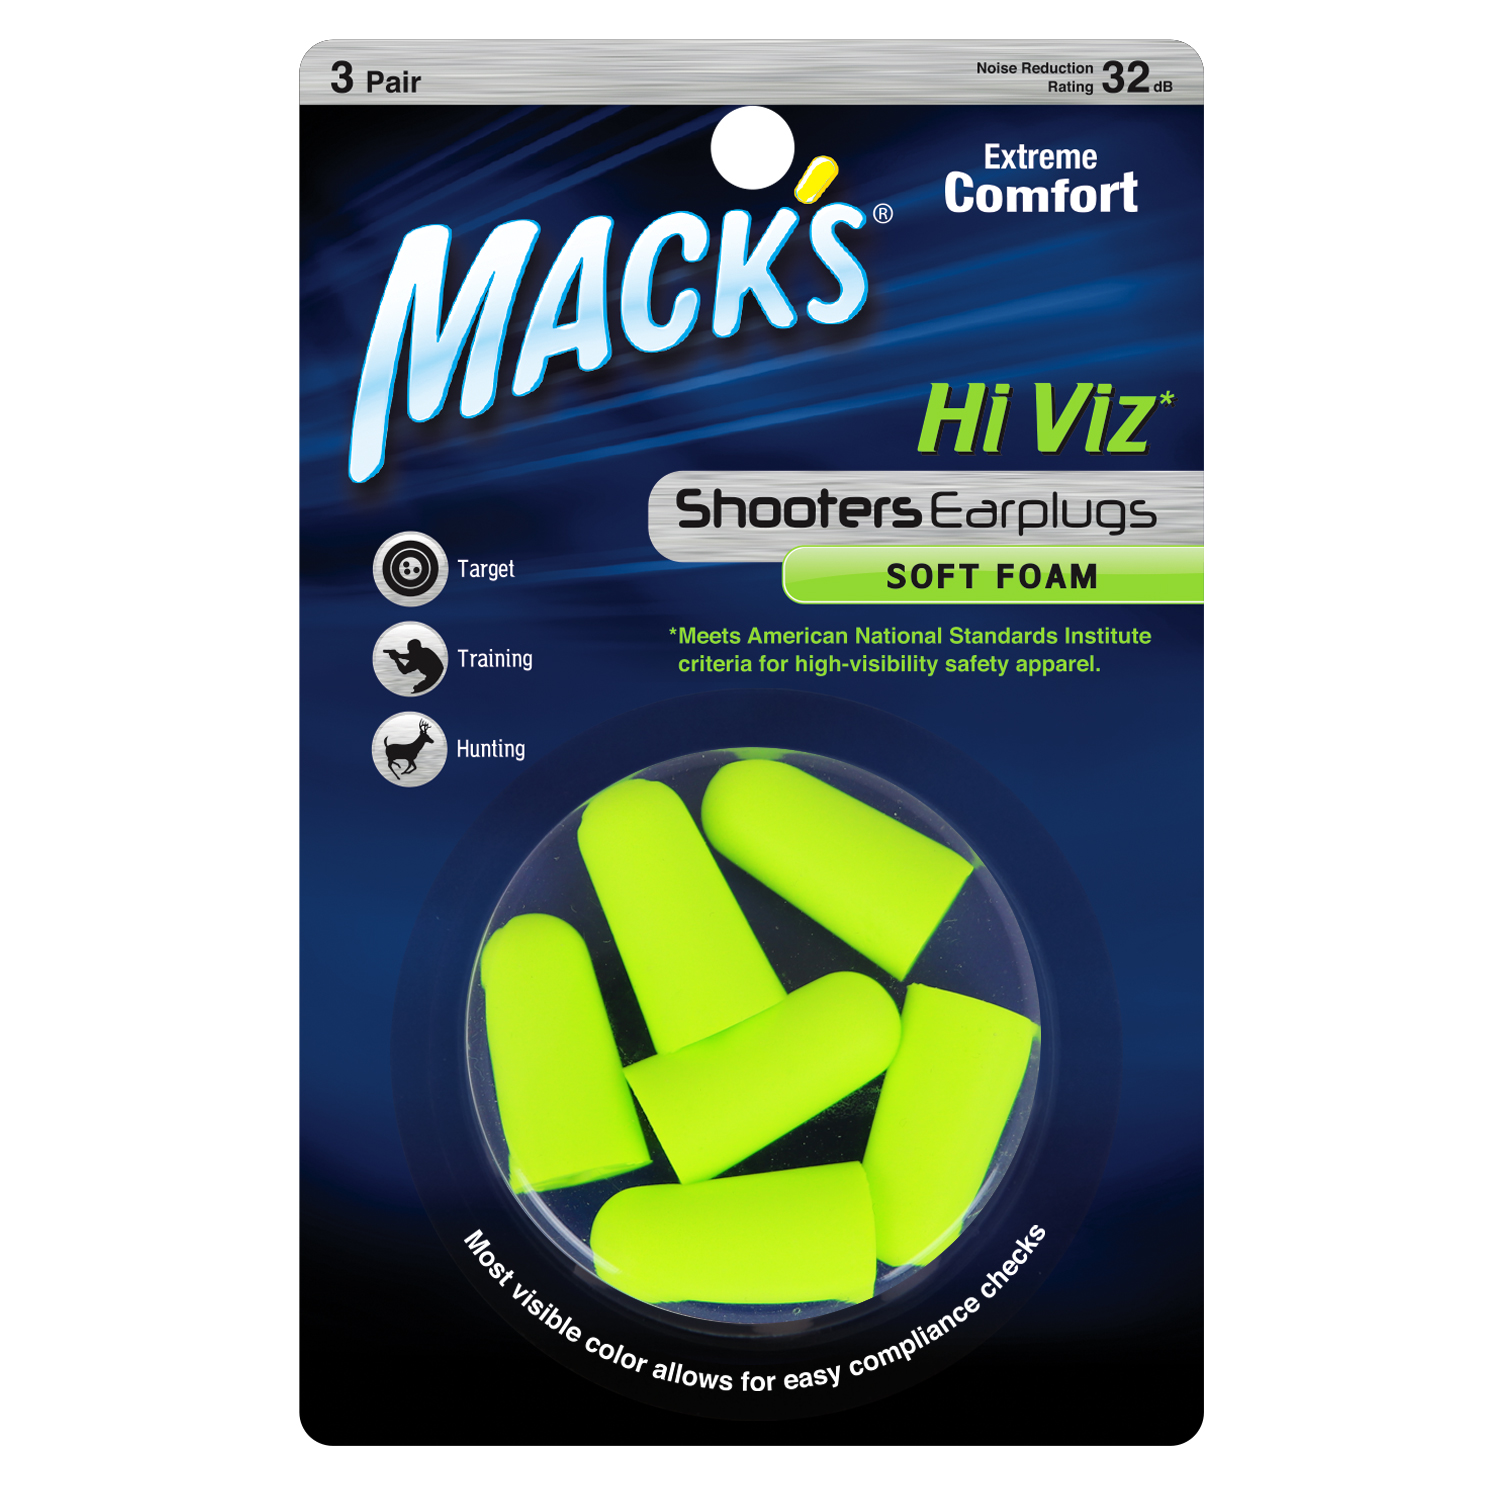 Mack's Soft Foam Shooting Earplugs Macks Shooters Hi Viz Ear Plugs 